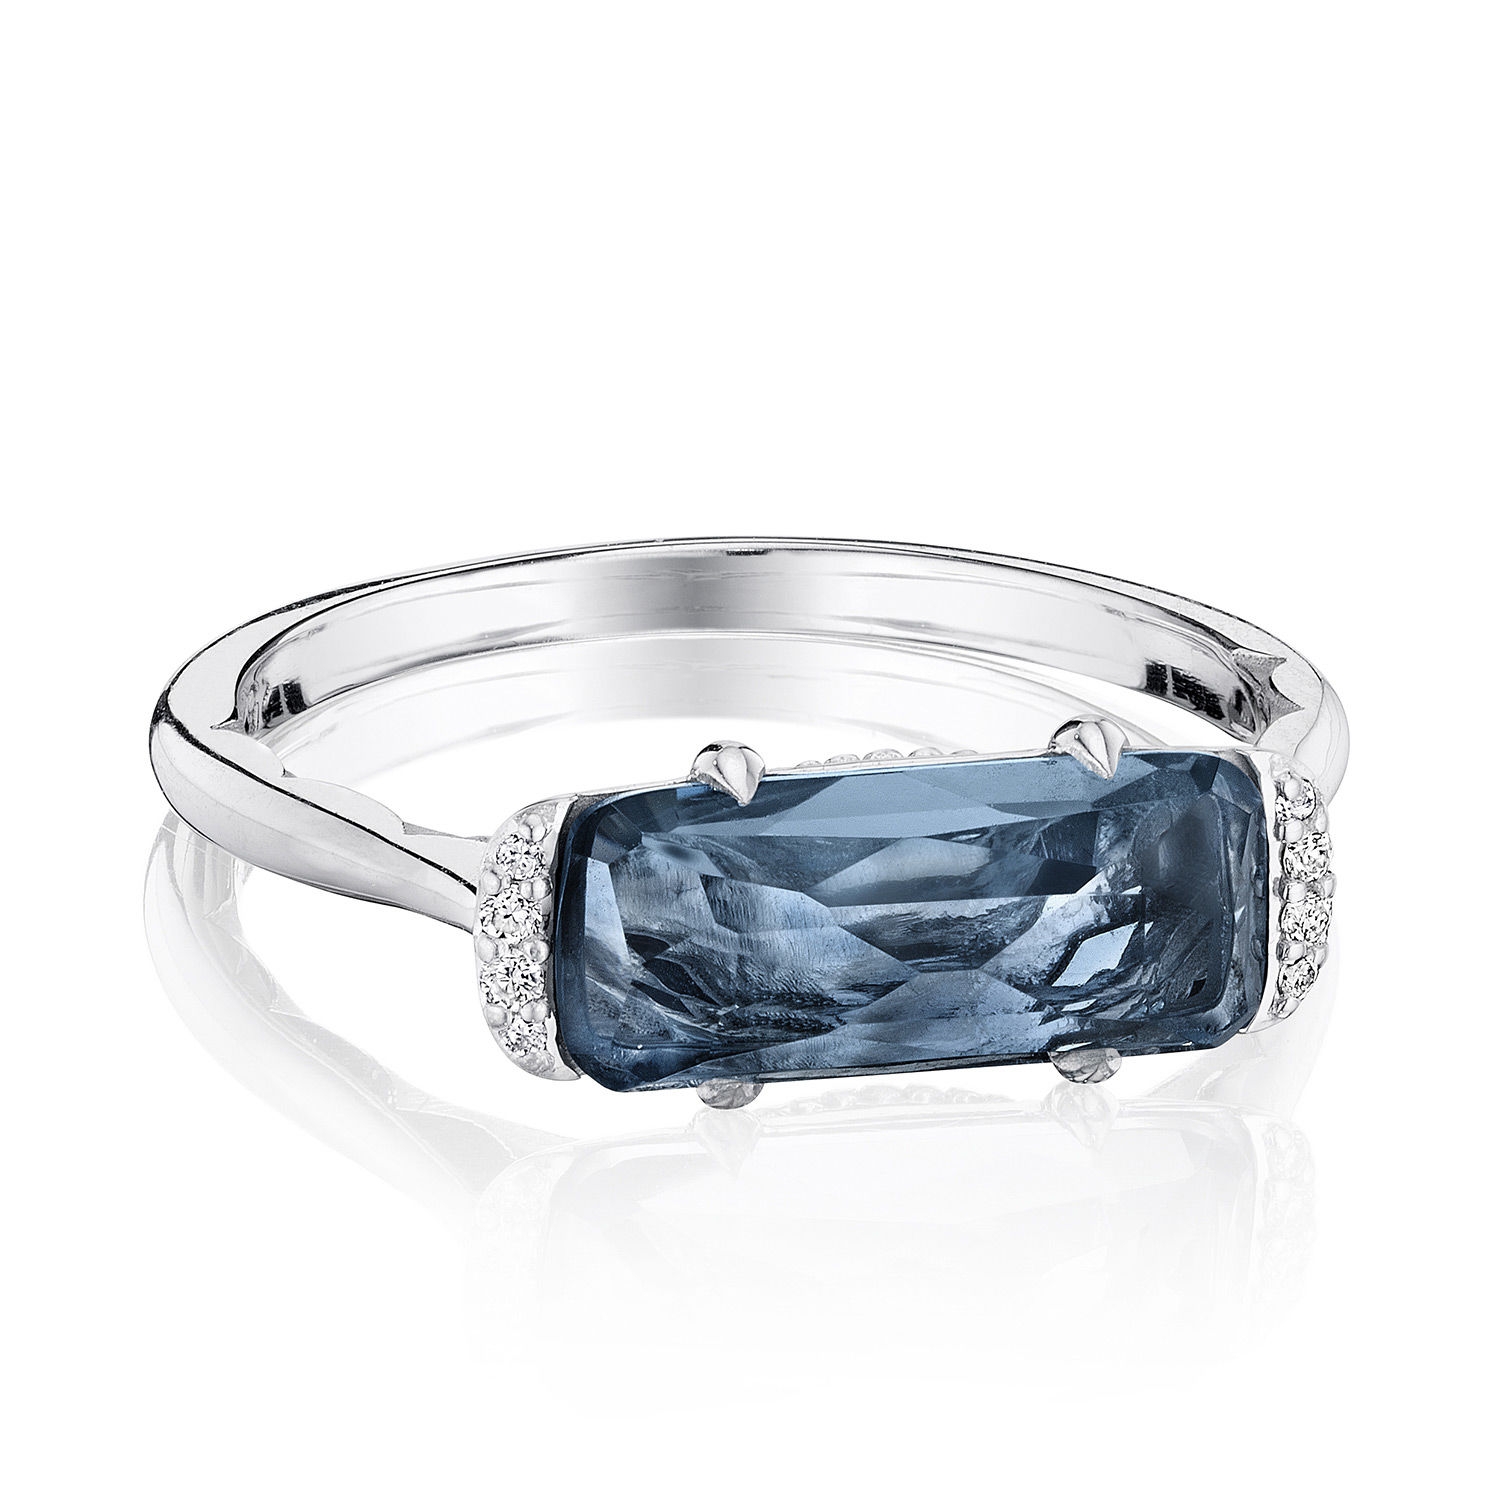 Tacori SR22433 Solitaire Emerald Cut Ring with London Blue Topaz